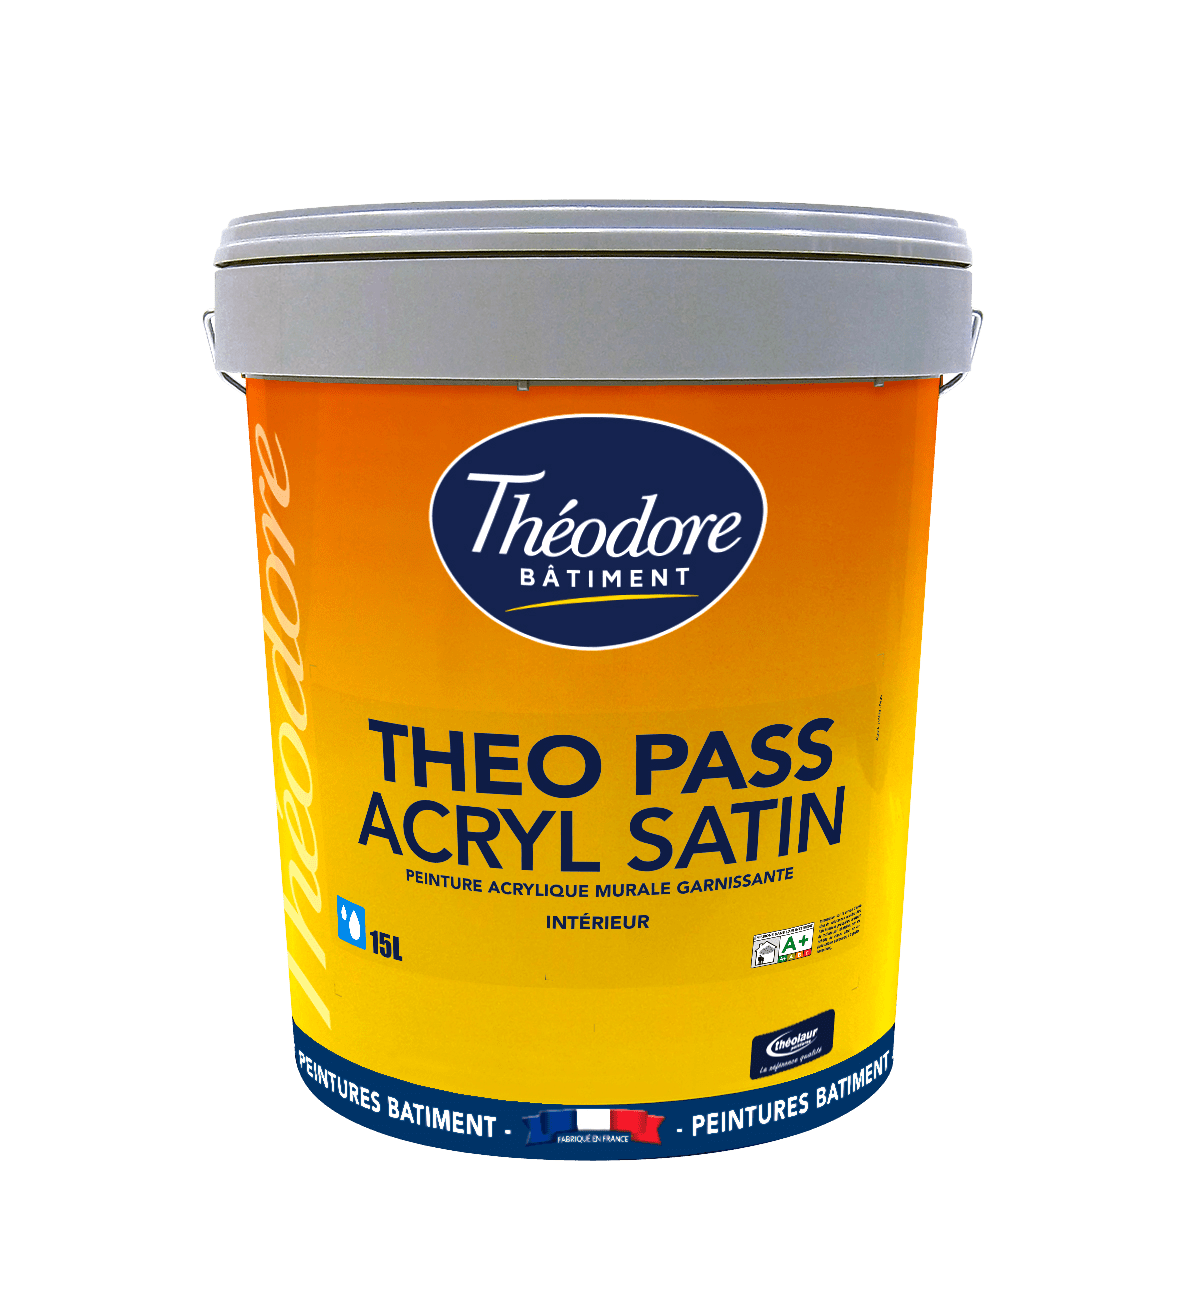 Theo pass acryl satin 15l 0620